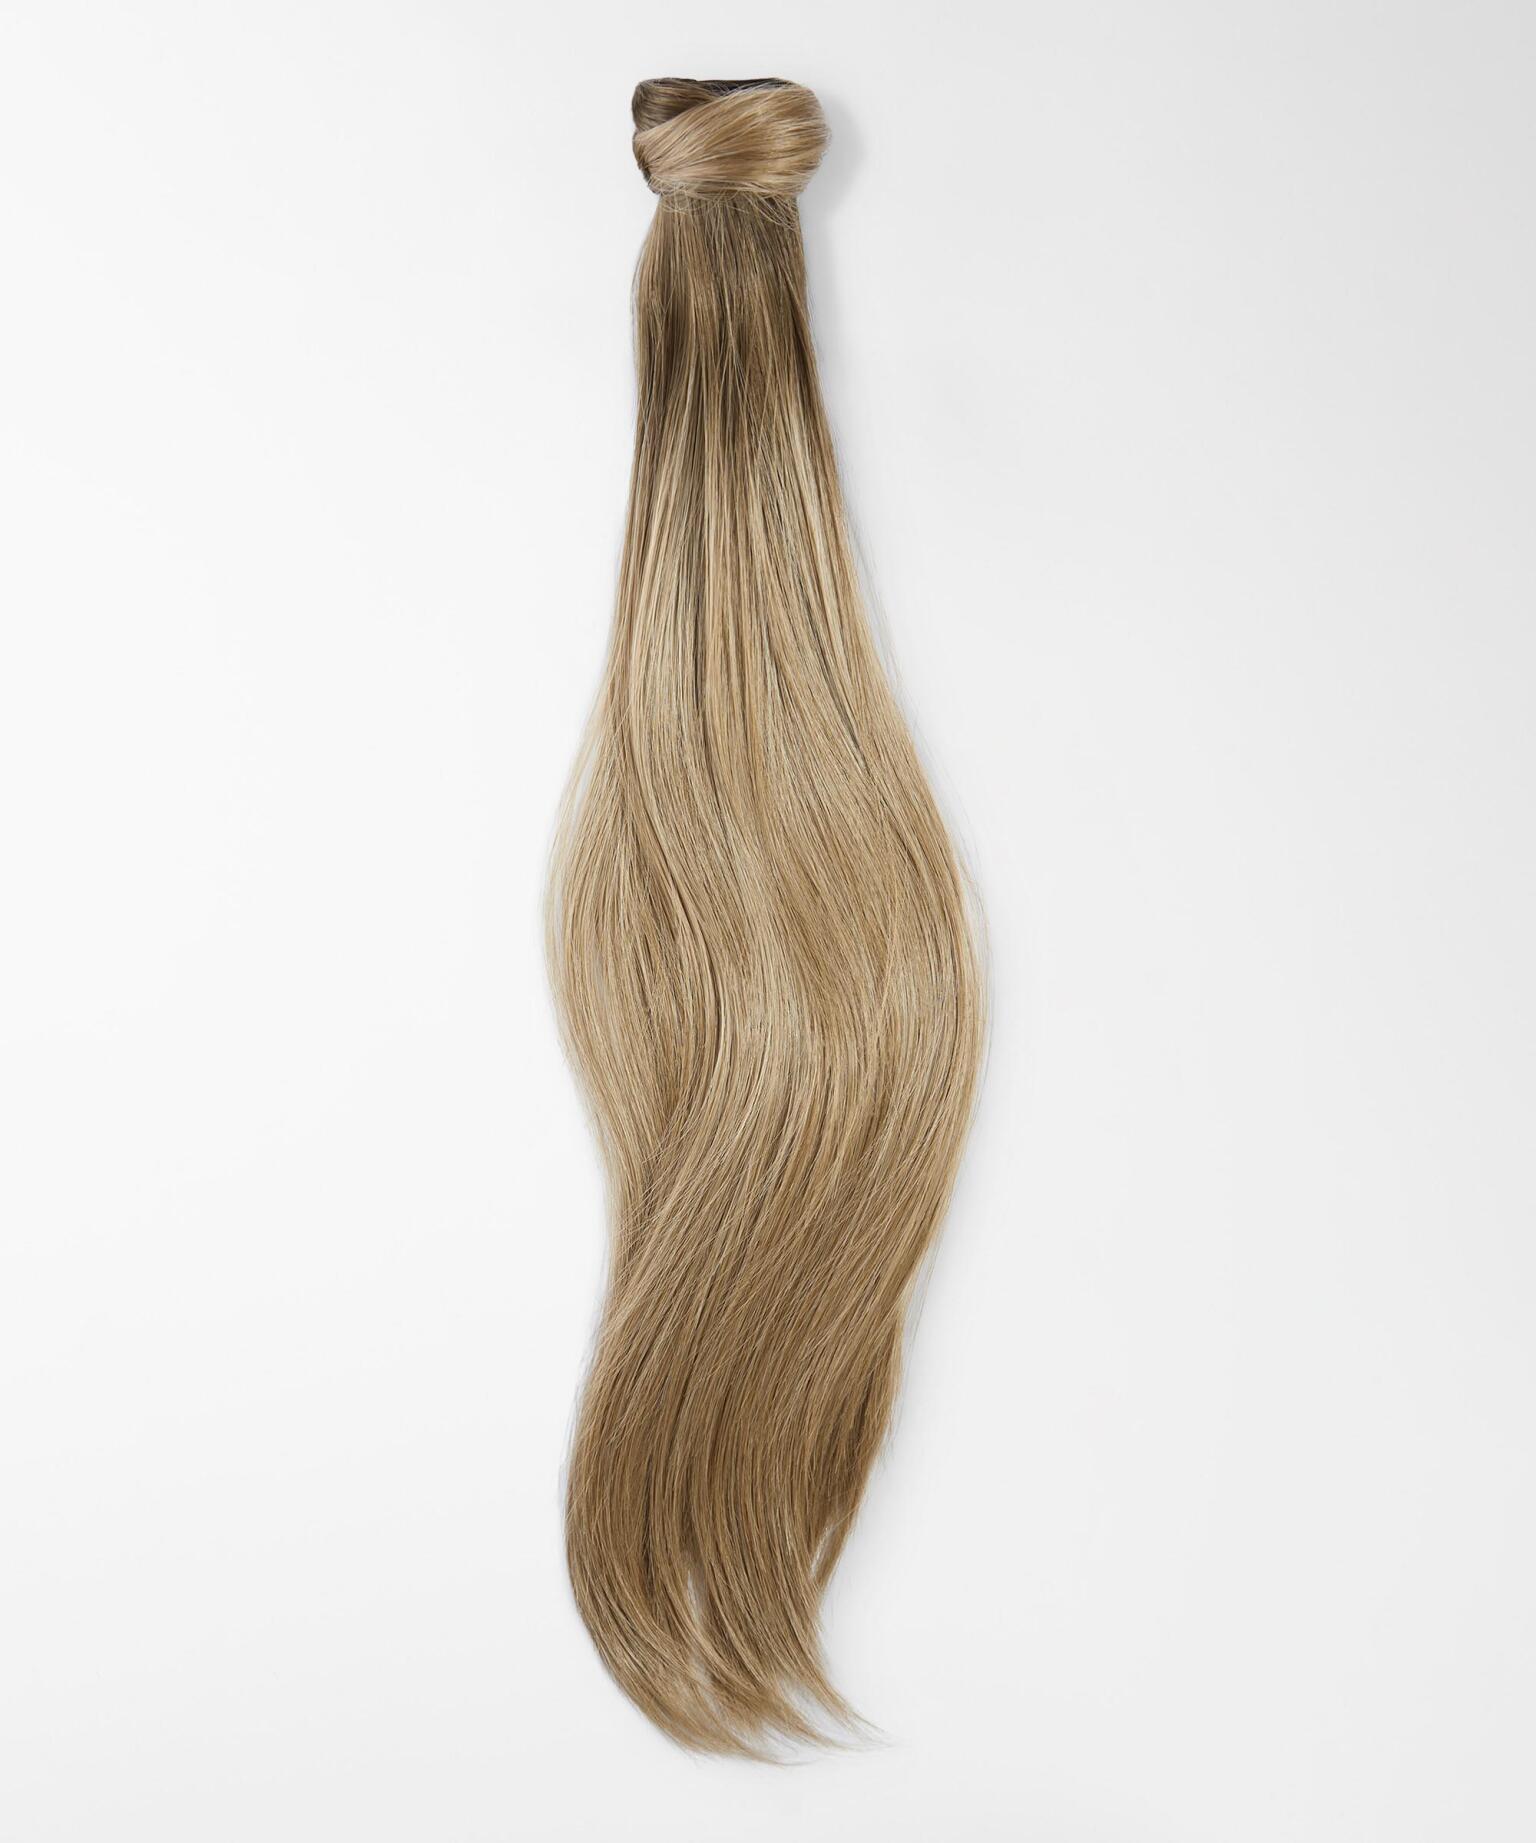 Fibre Clip-in Ponytail Aus veganem Haar hergestellt B5.1/7.3 Brown Ash Blonde Balayage 50 cm